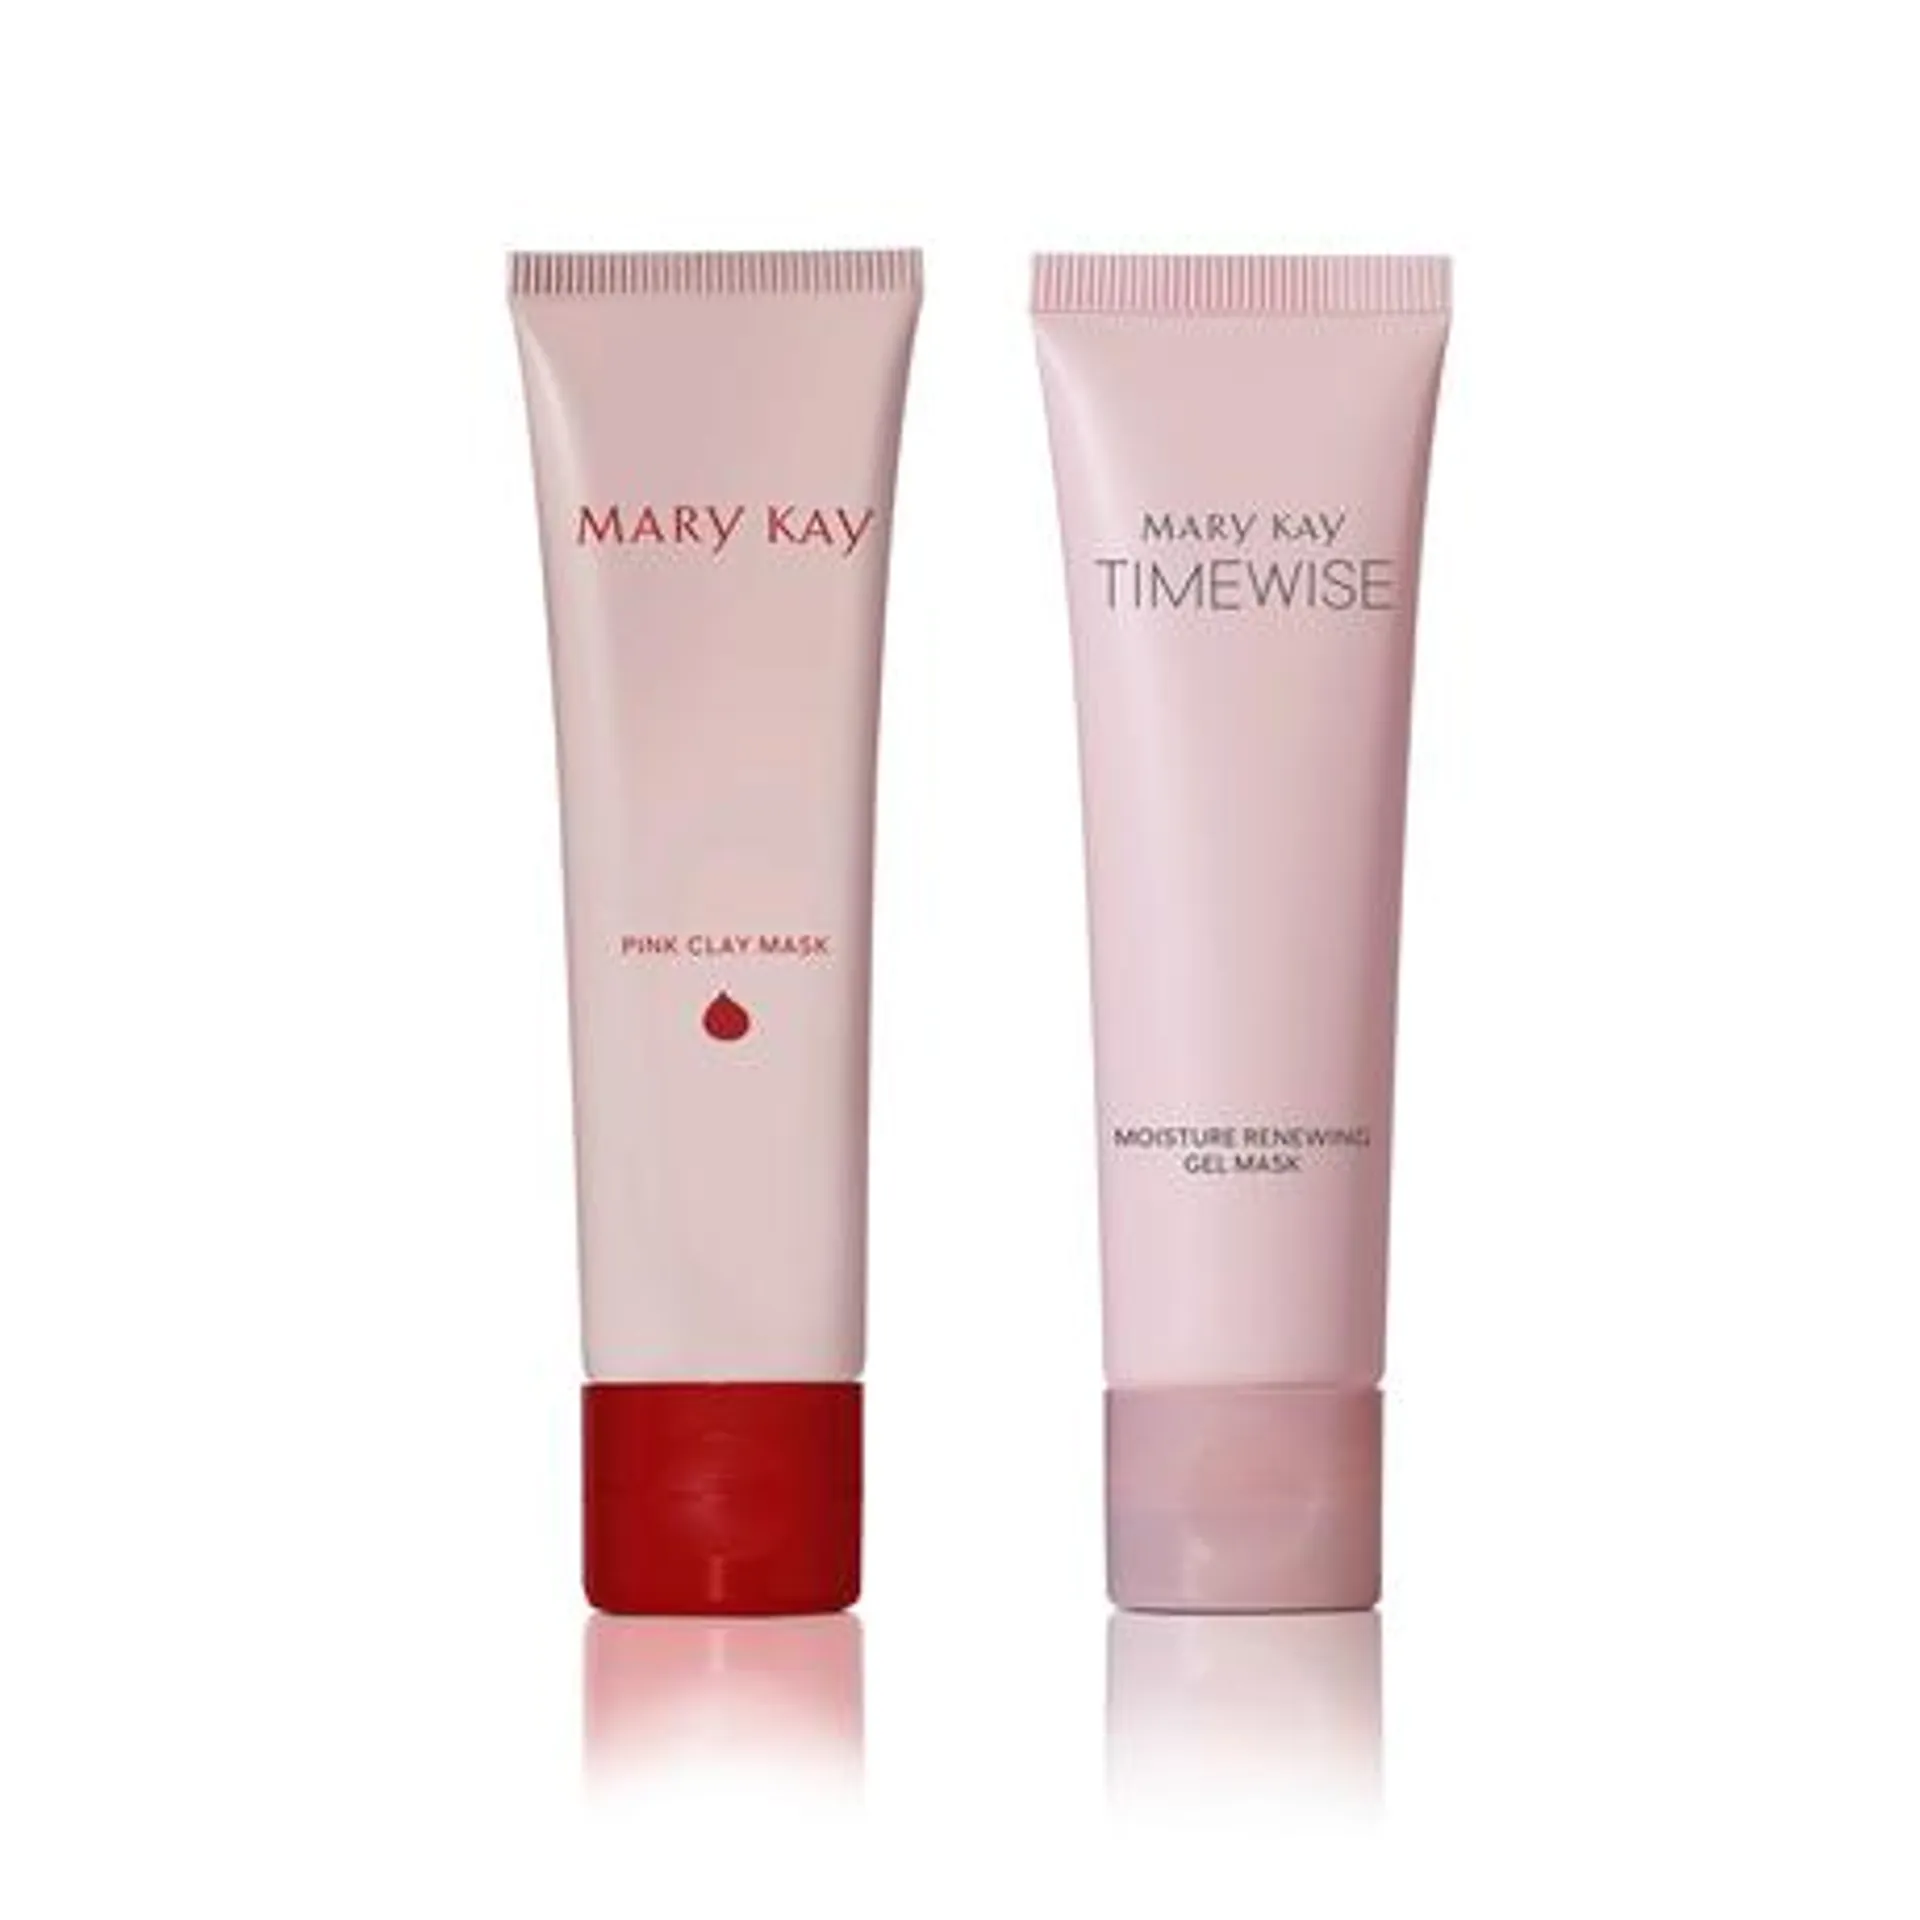 Mary Kay® Masking Minis - Moisture Renewing Gel Mask + Pink Clay Mask